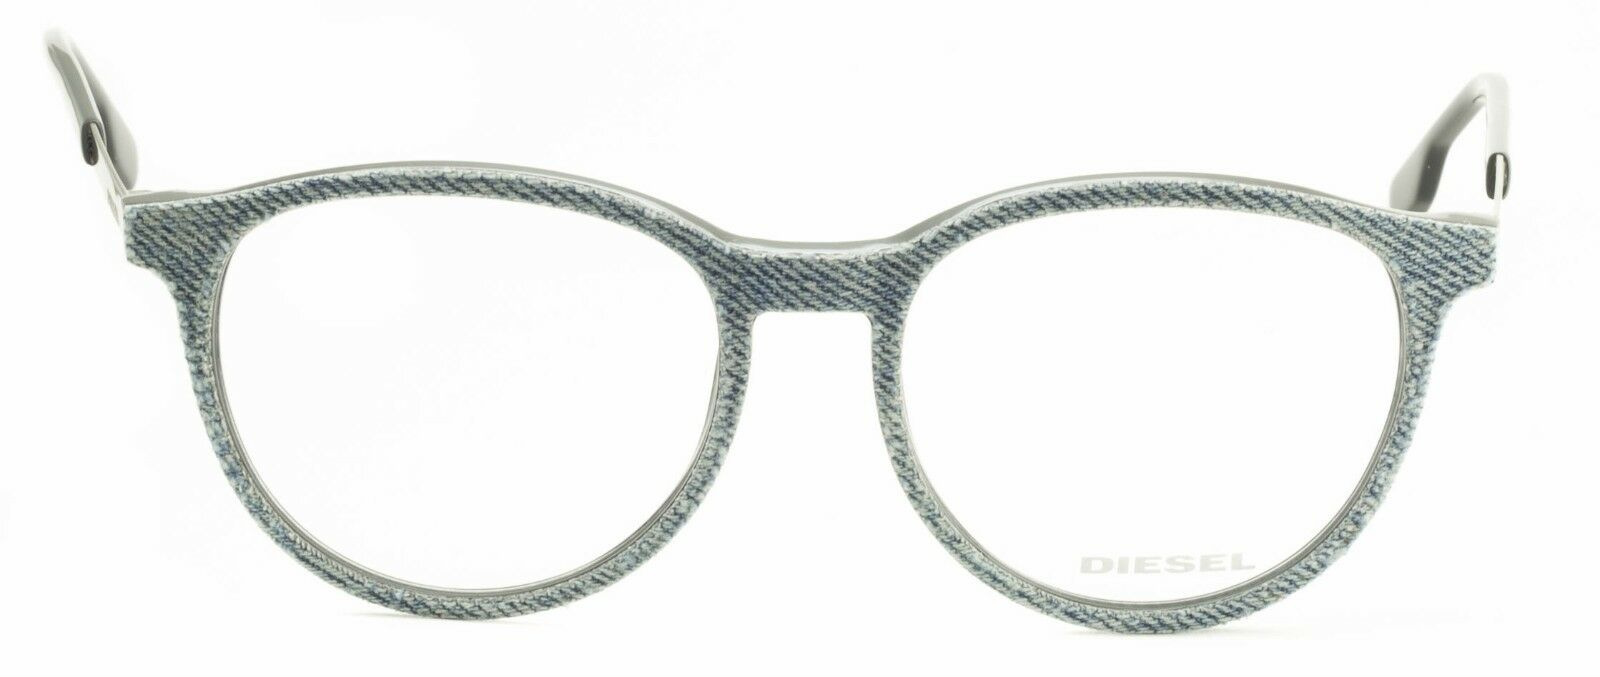 DIESEL DL 5117 col 002 Eyewear FRAMES RX Optical Eyeglasses Glasses New - BNIB